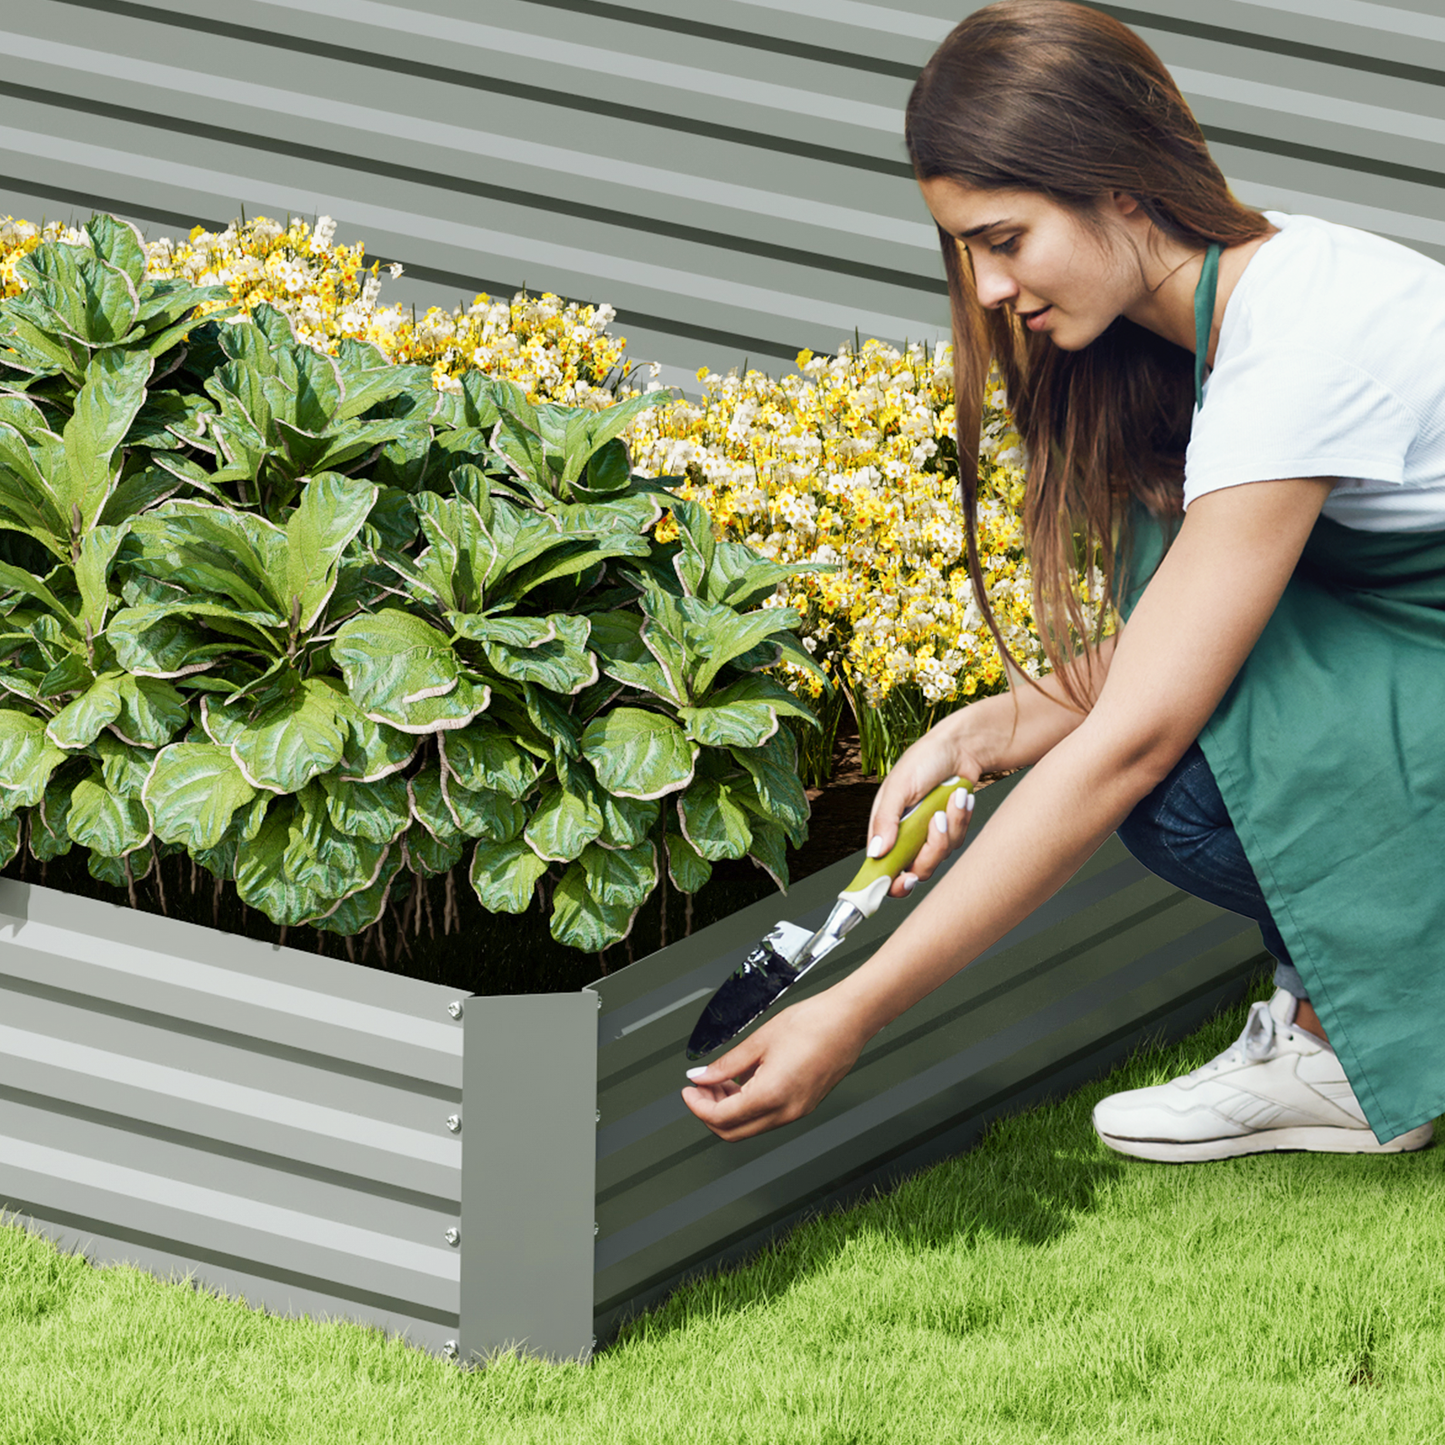 12" H Patio Metal Raised Garden Bed Kit Vegetable Flower Planter 48.5" Square Box